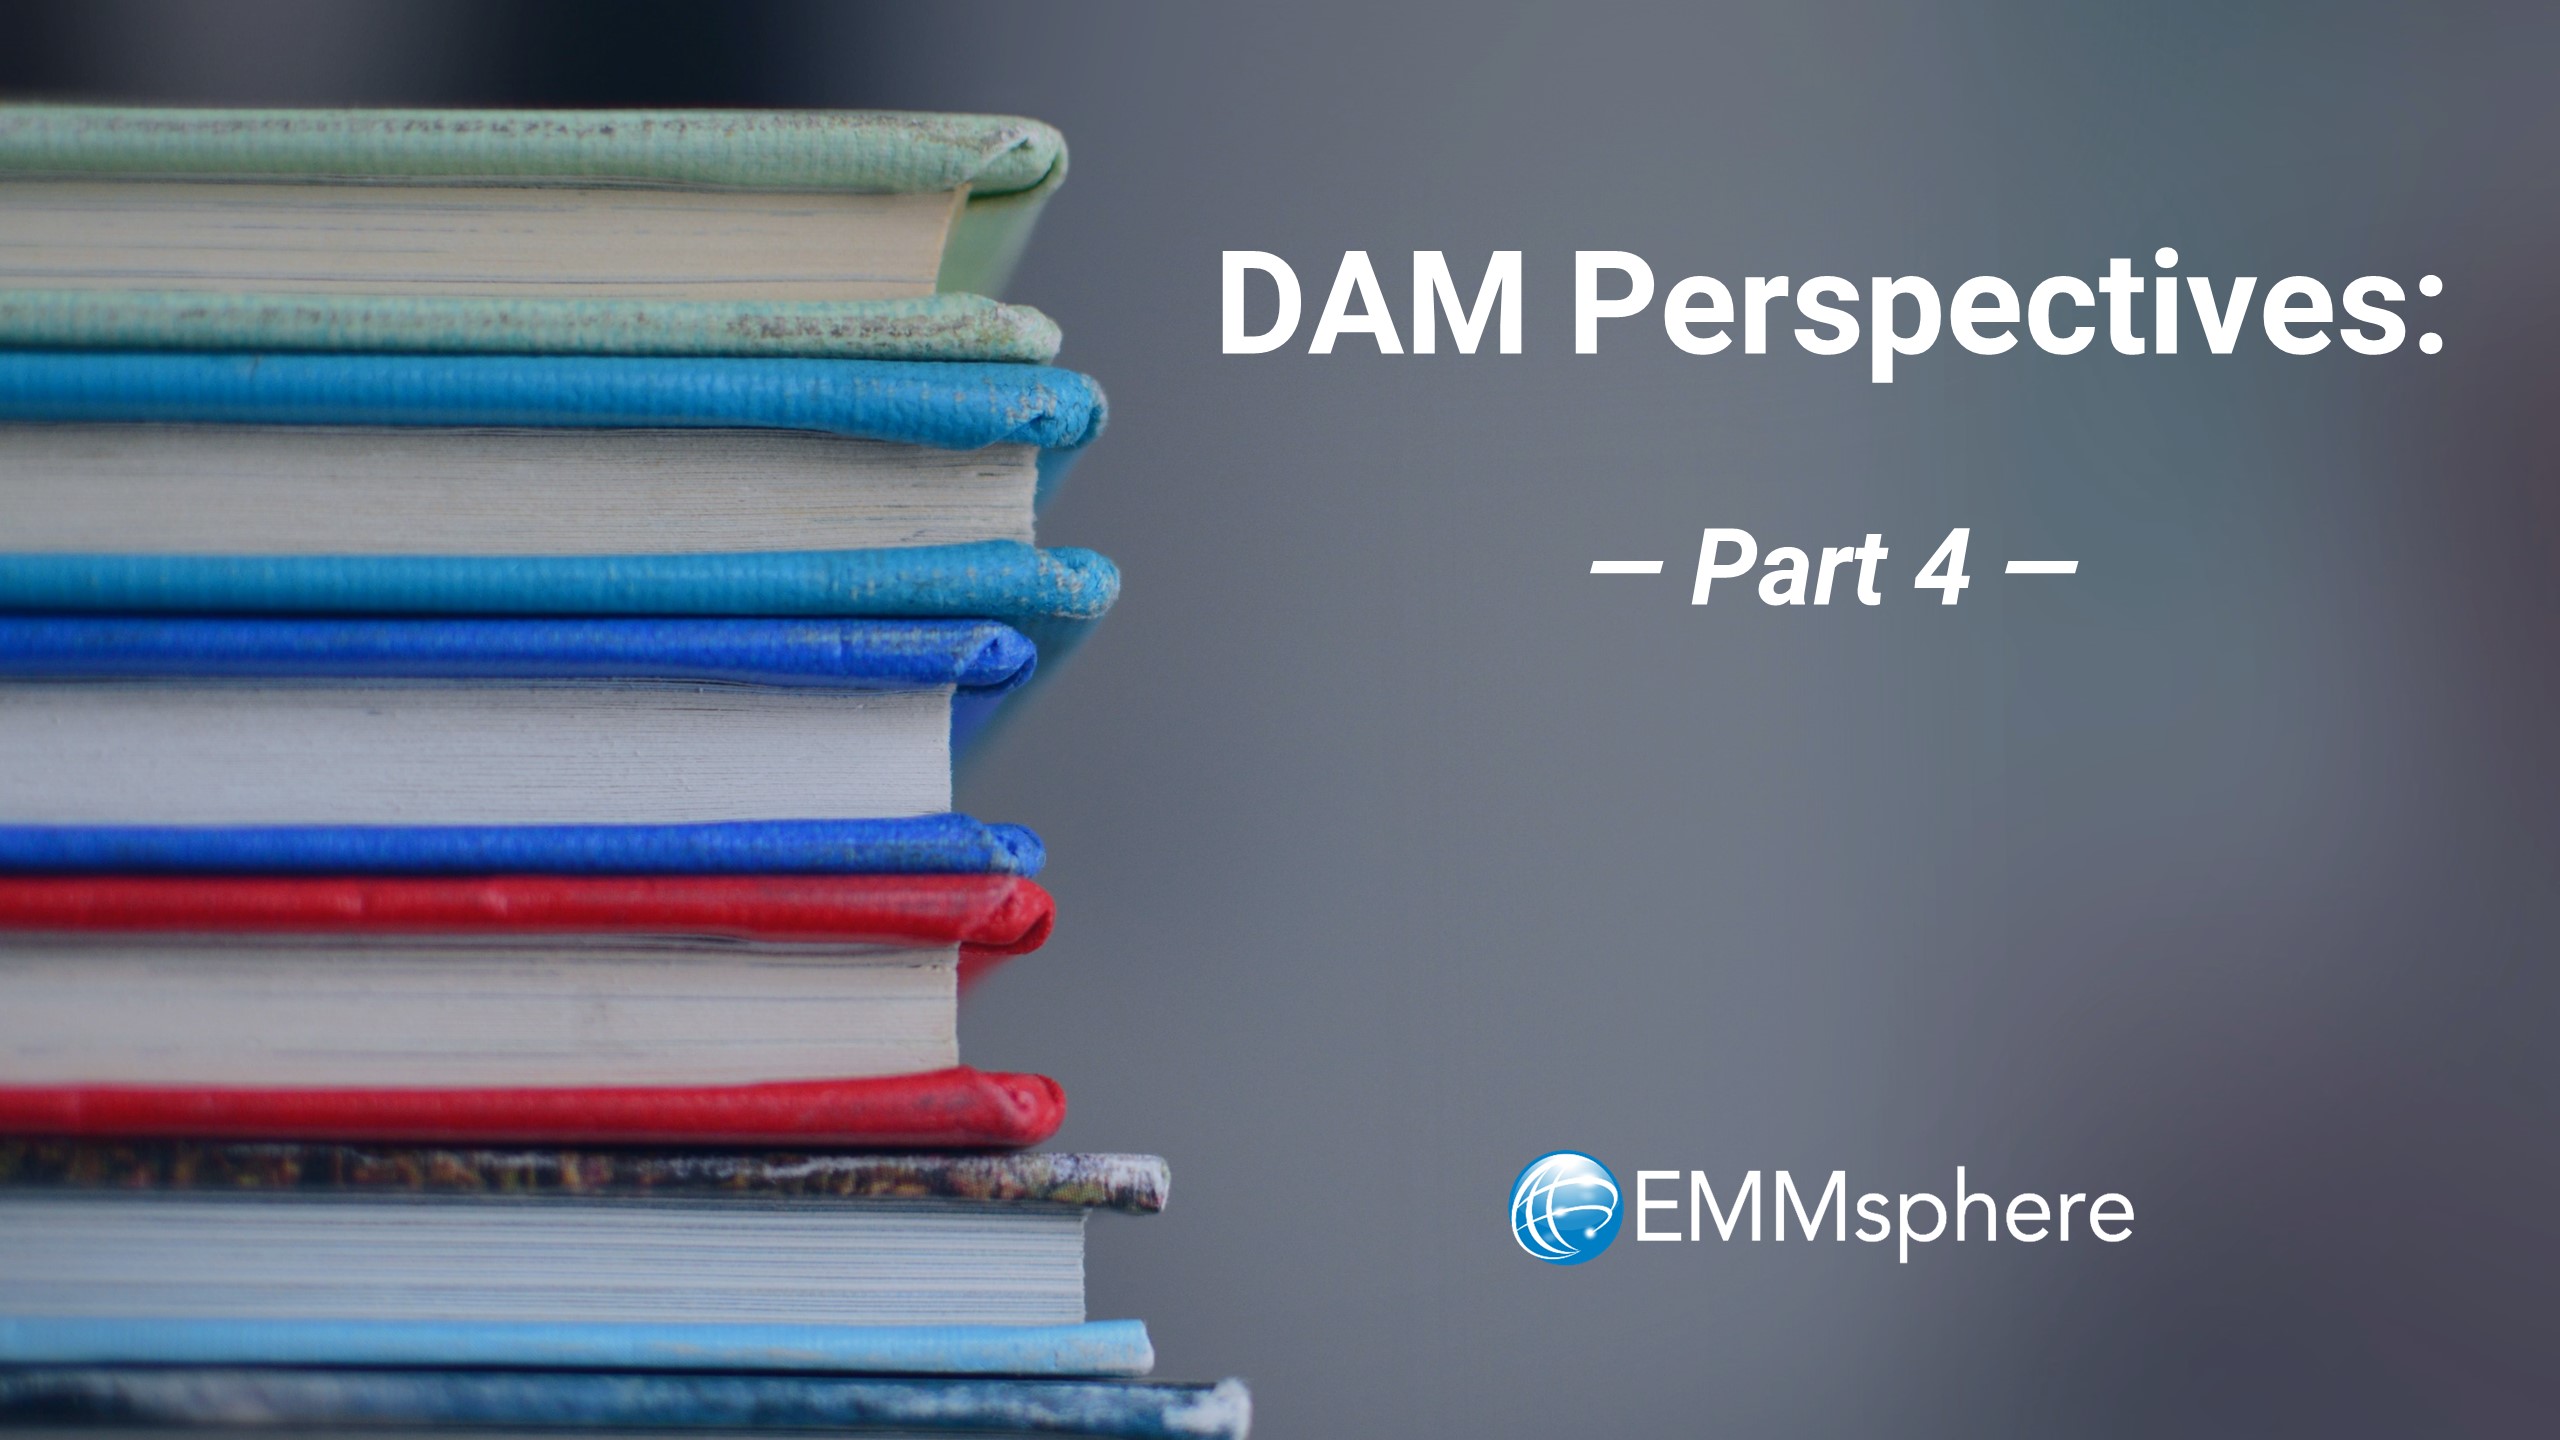 DAM Perspectives - Part 4